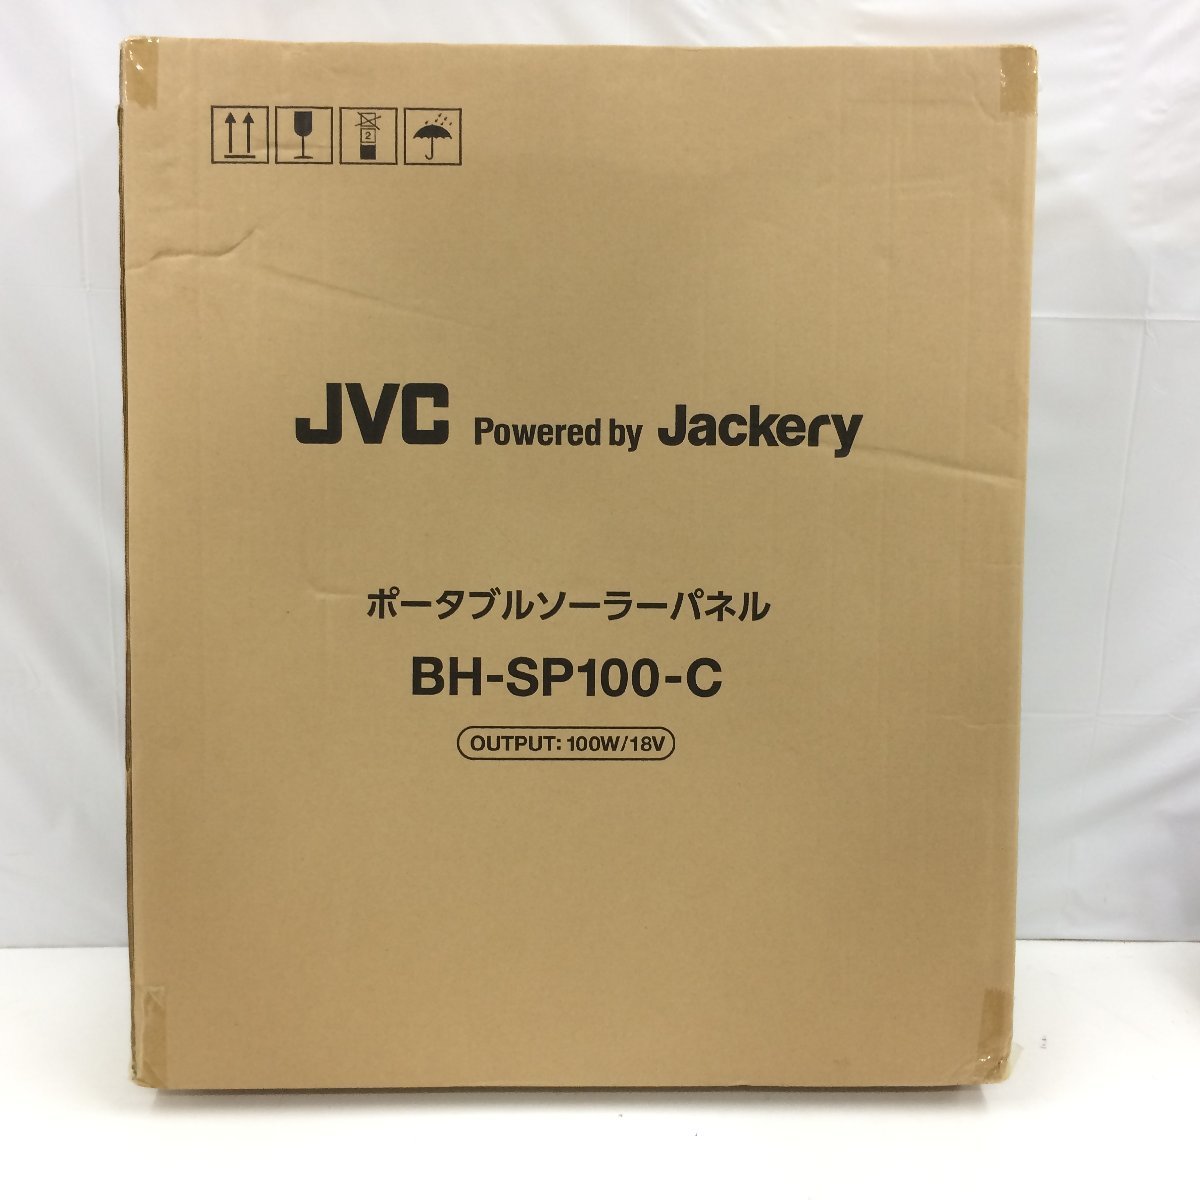 f156*160 【未開封品】 JVC Powered by Jackery ポータブルソーラーパネル BH-SP100-C OUTPUT:100W/18V